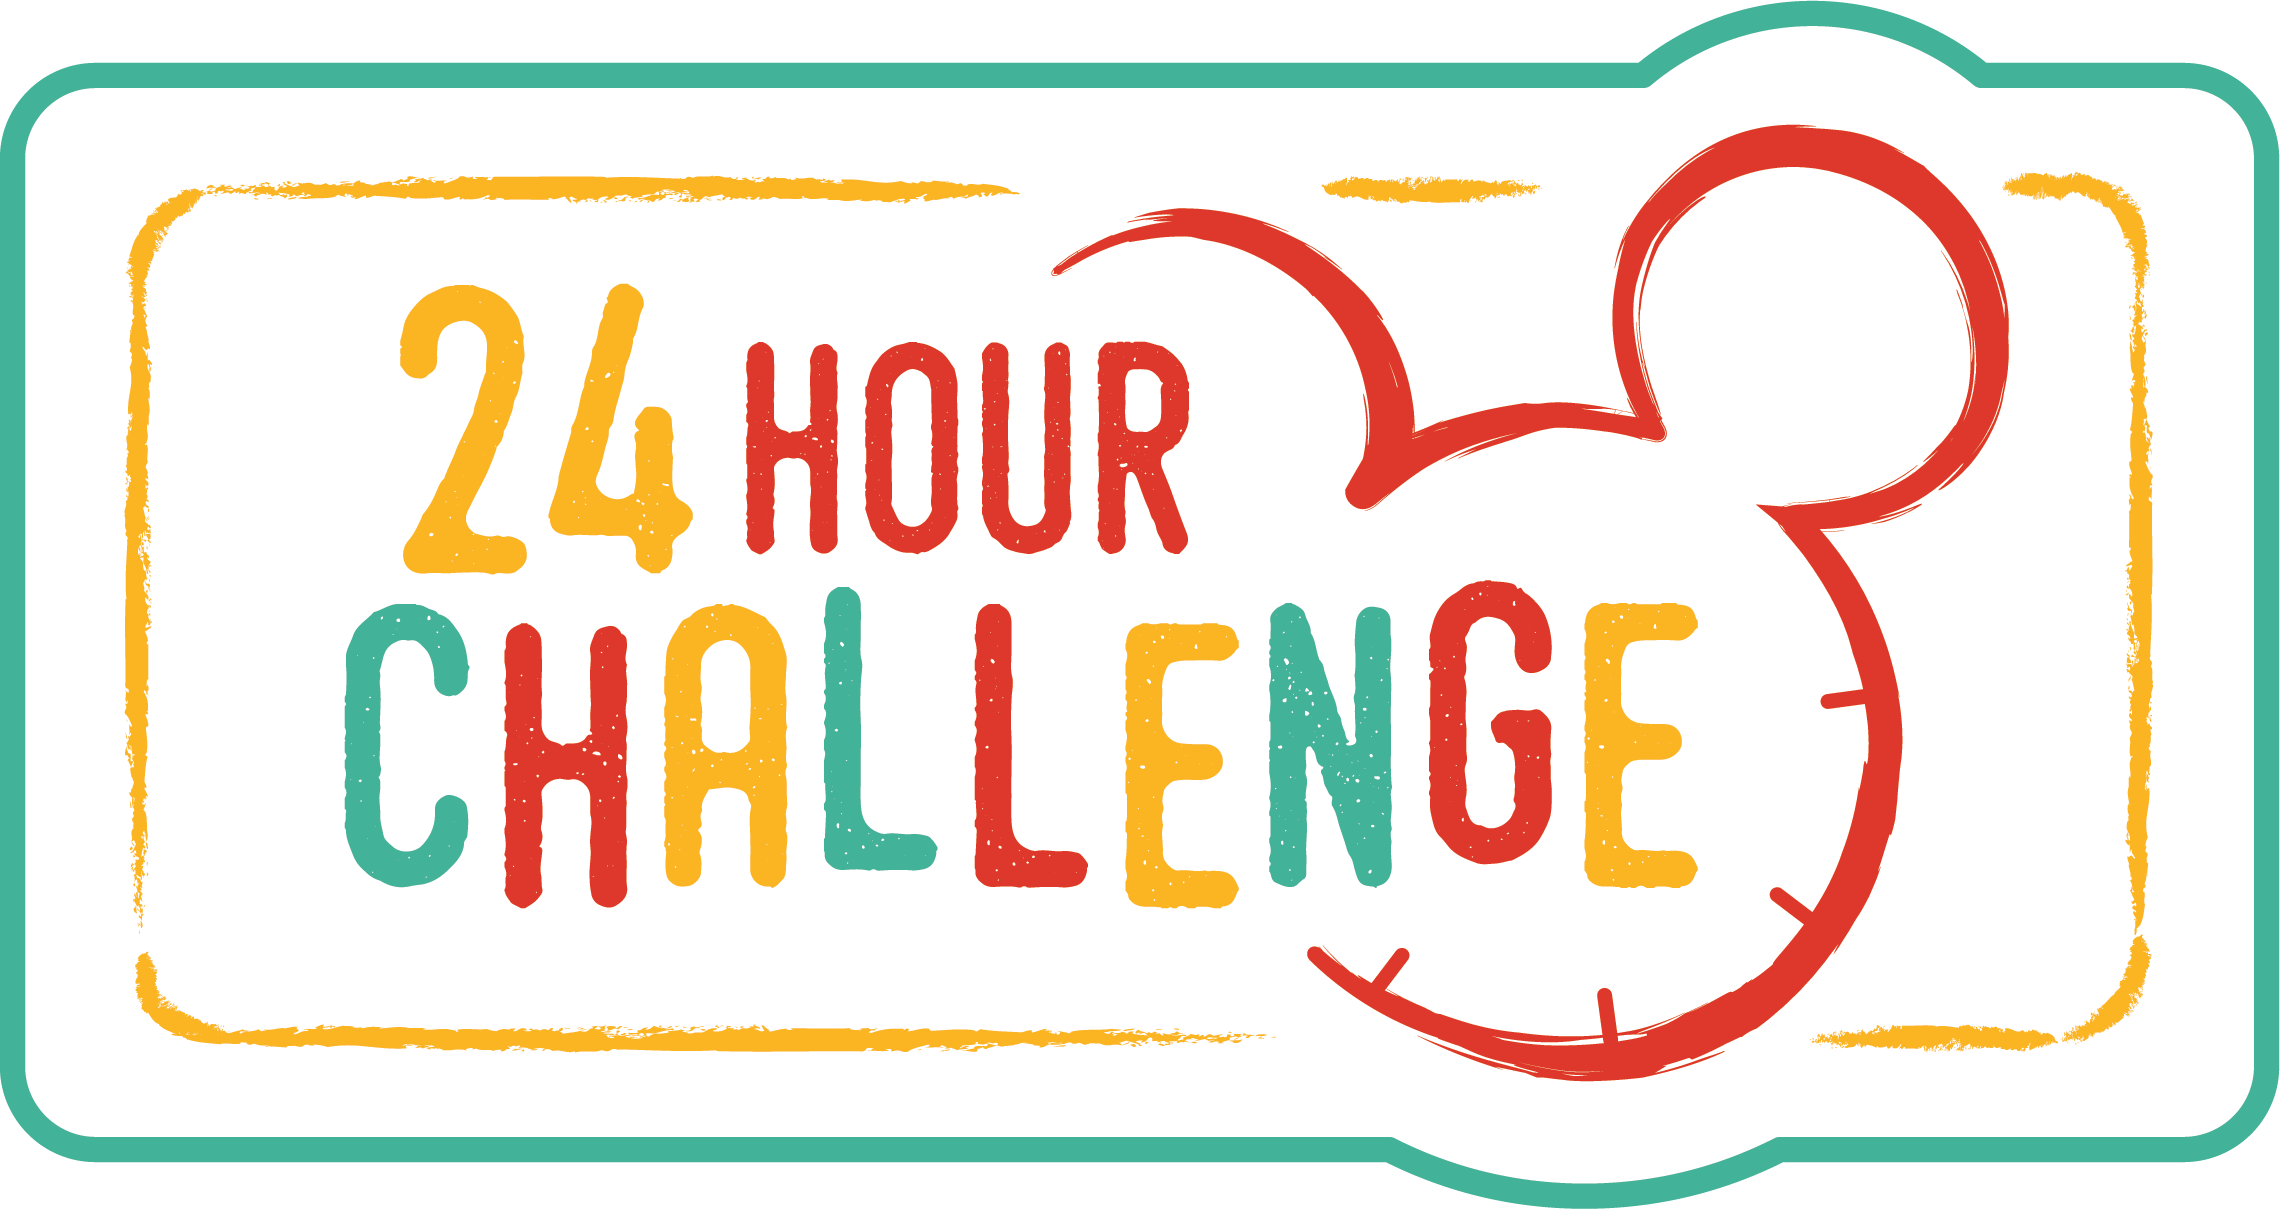 Disney 24 Hour Challenge